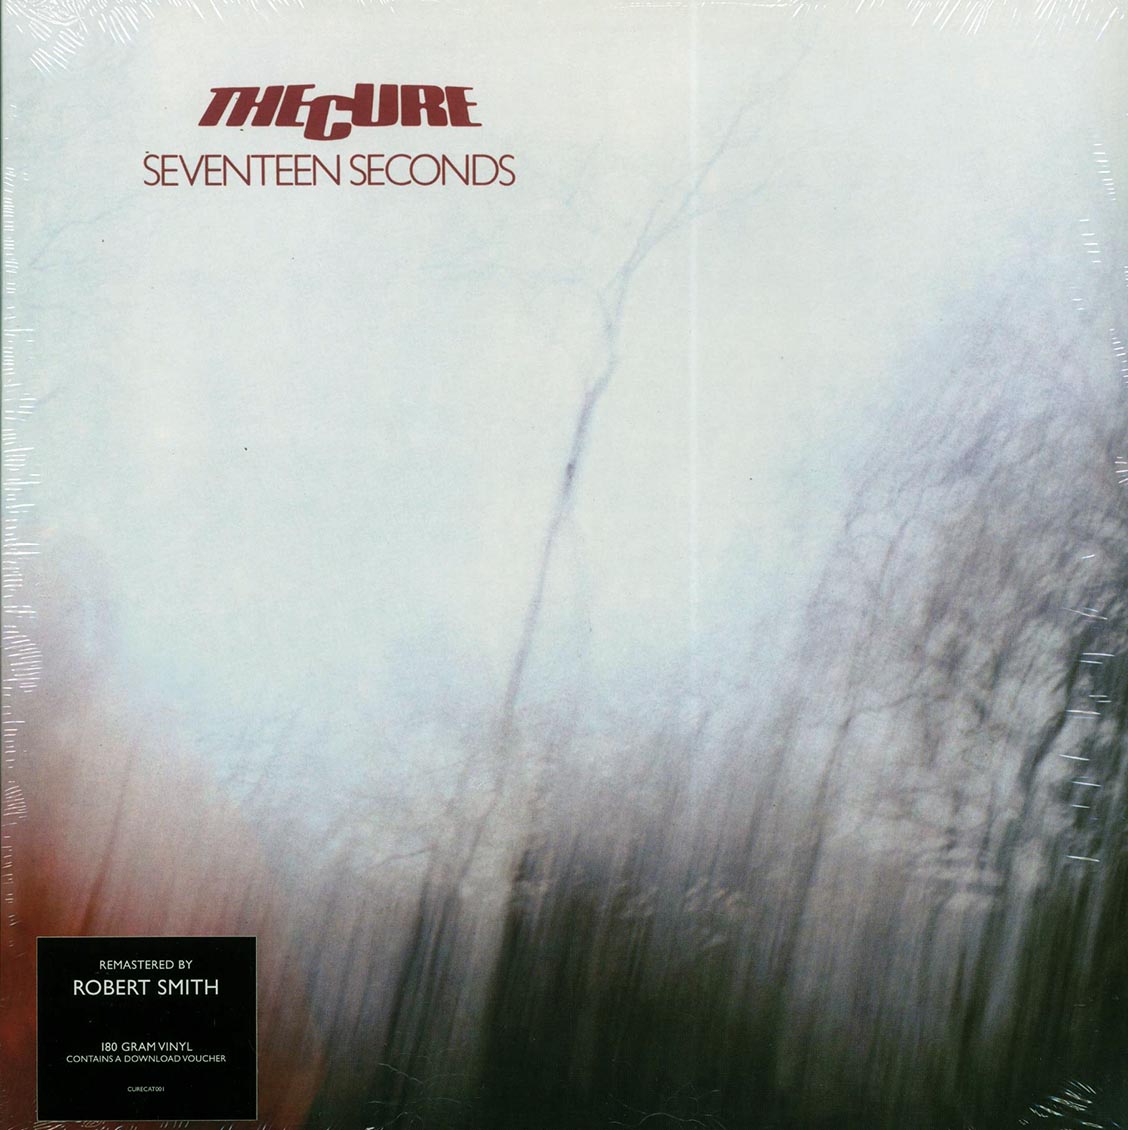 The Cure - Seventeen Seconds (180g) (remastered) - Vinyl LP